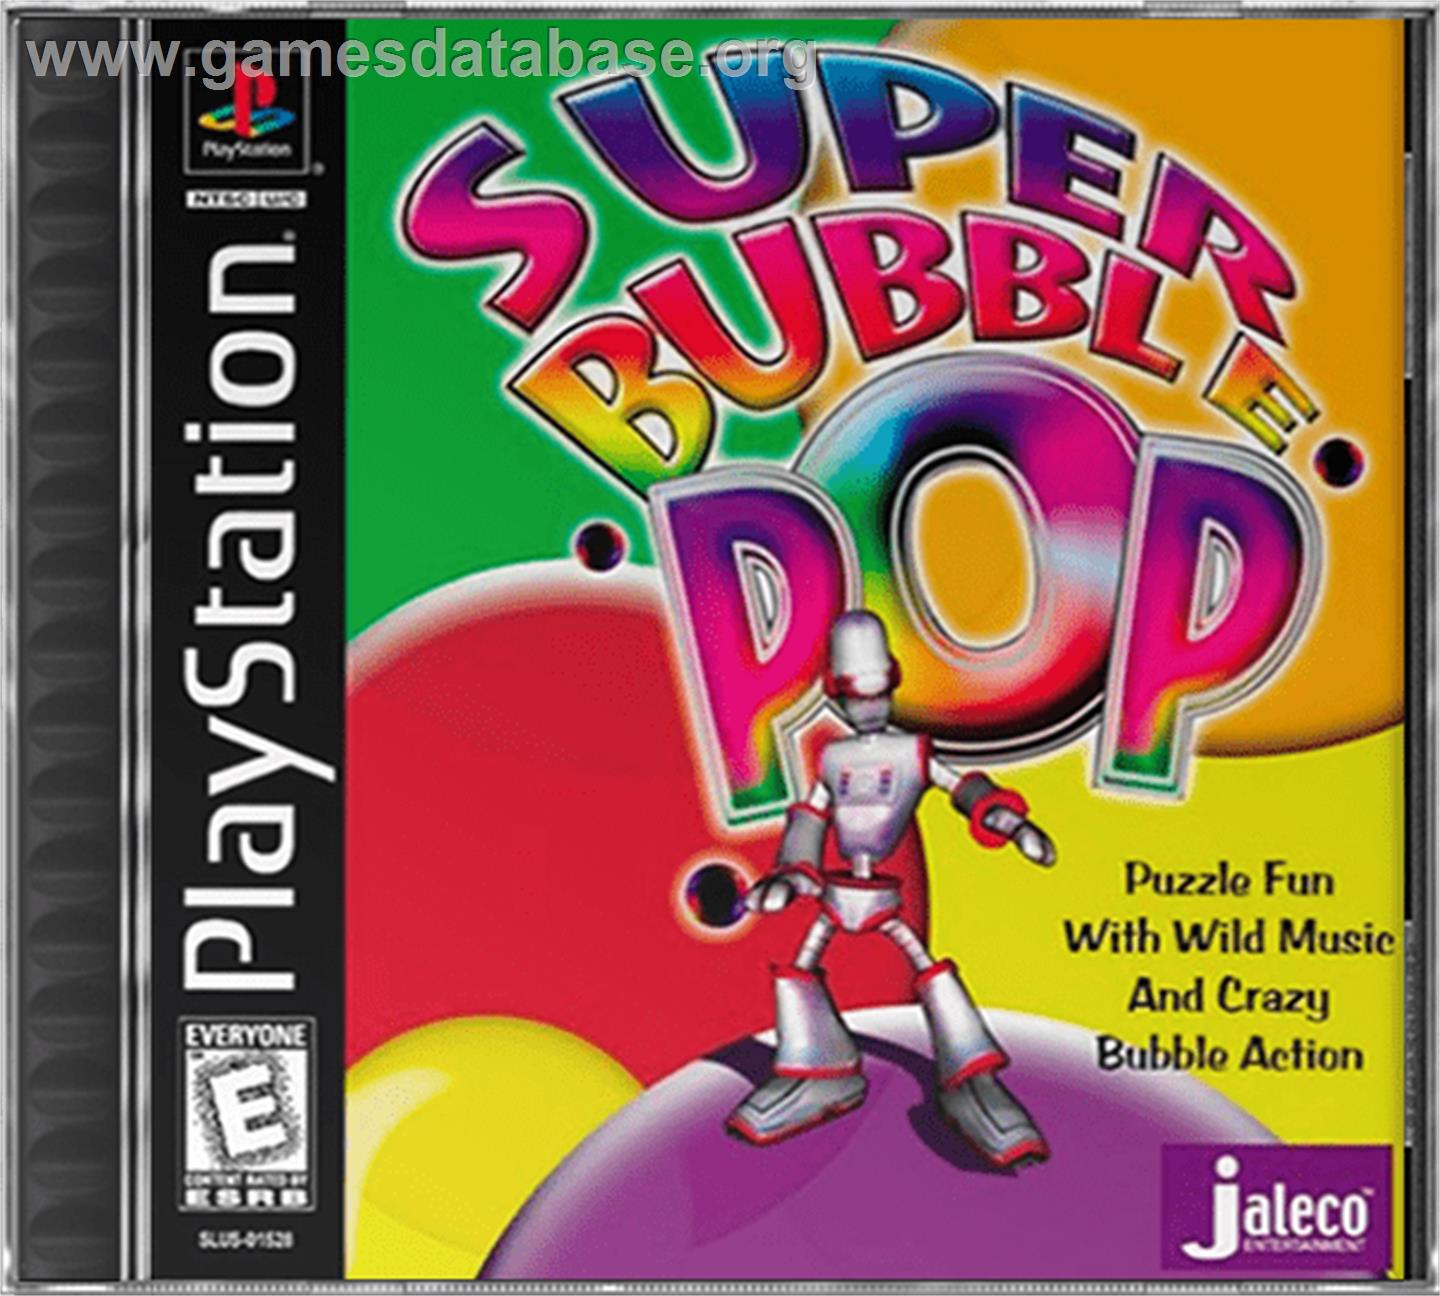 Super Bubble Pop - Sony Playstation - Artwork - Box